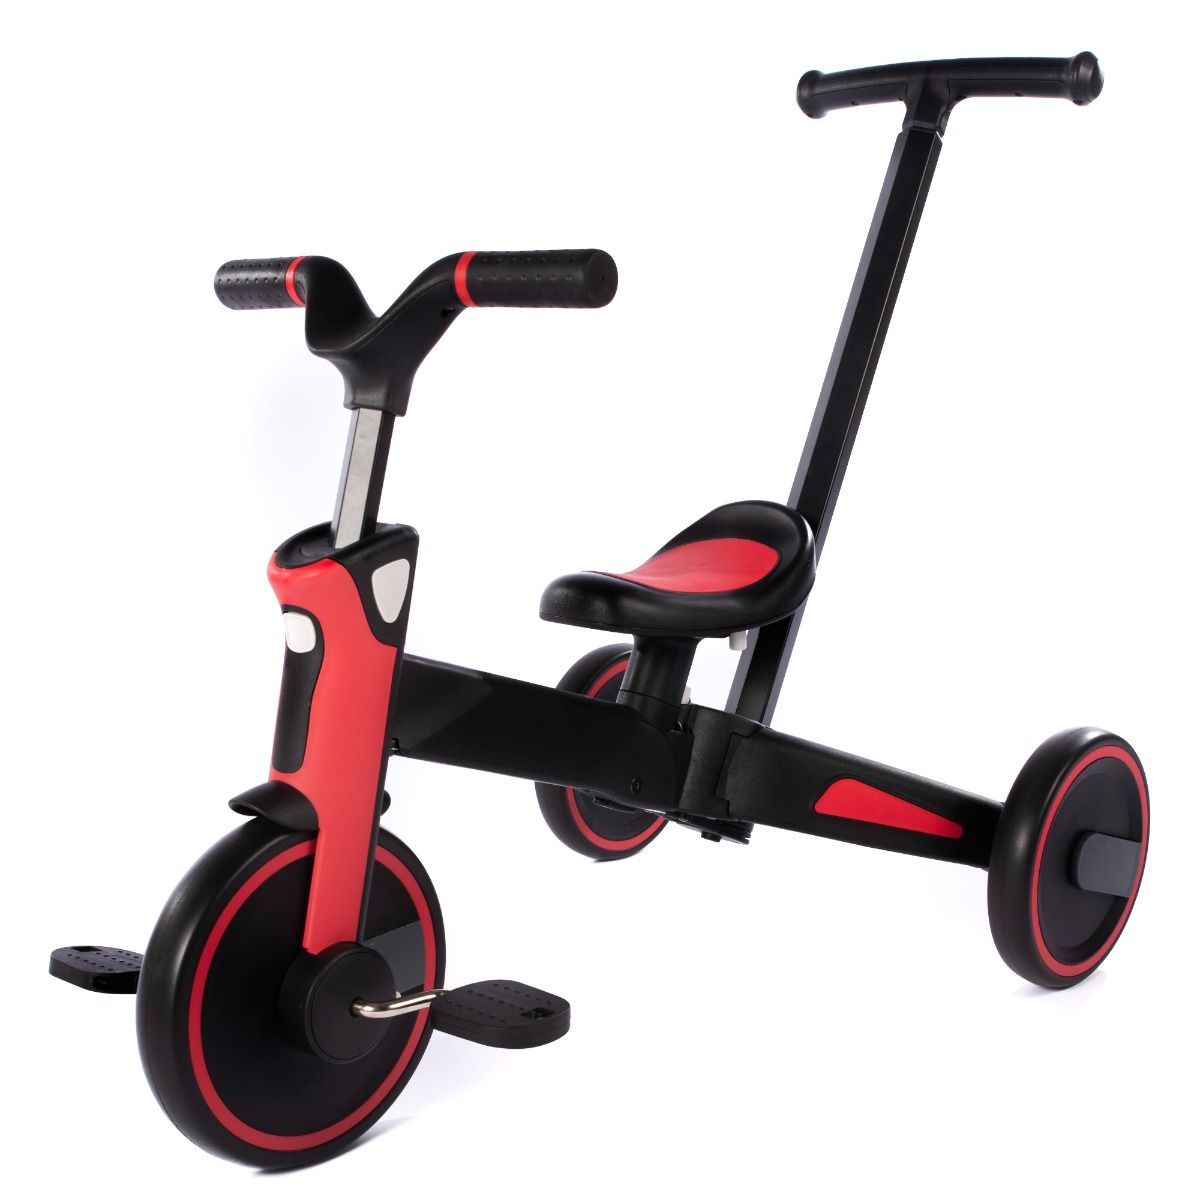 Tricicleta pliabila cu maner 4 in 1 pentru copii, Red, UoniBaby